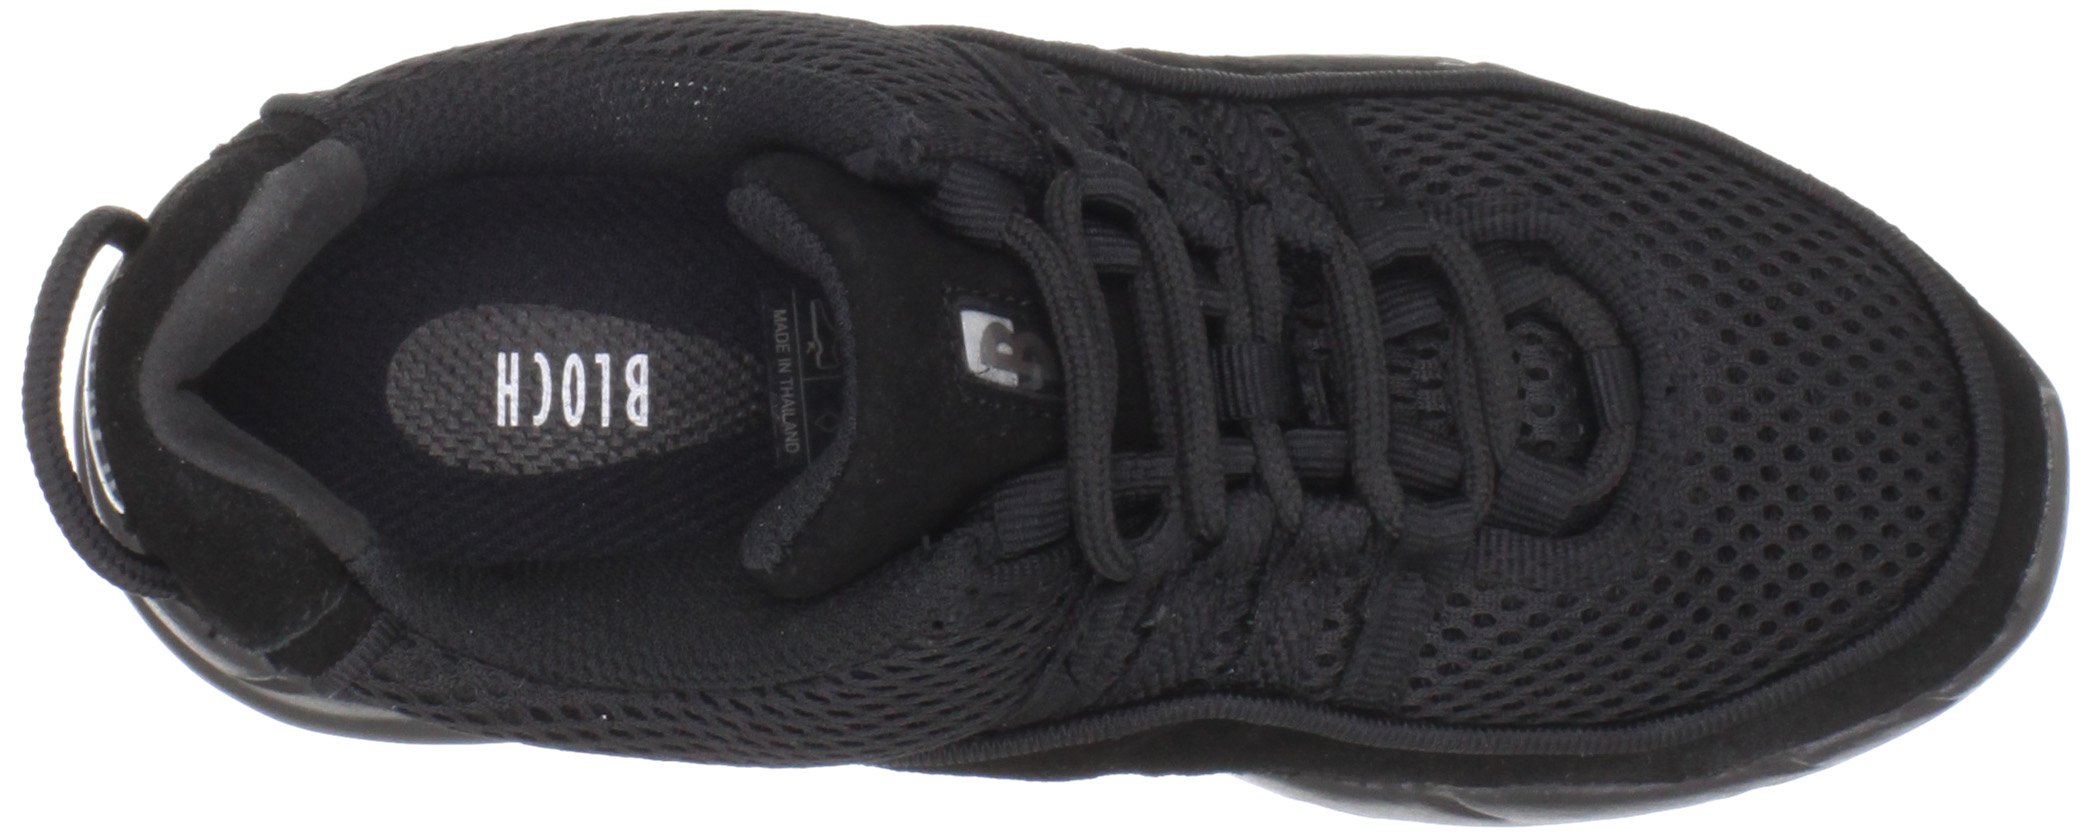 Bloch Unisex-Child Boost MESH Sneaker, Black, 1.5 X(Medium) US Little Kid